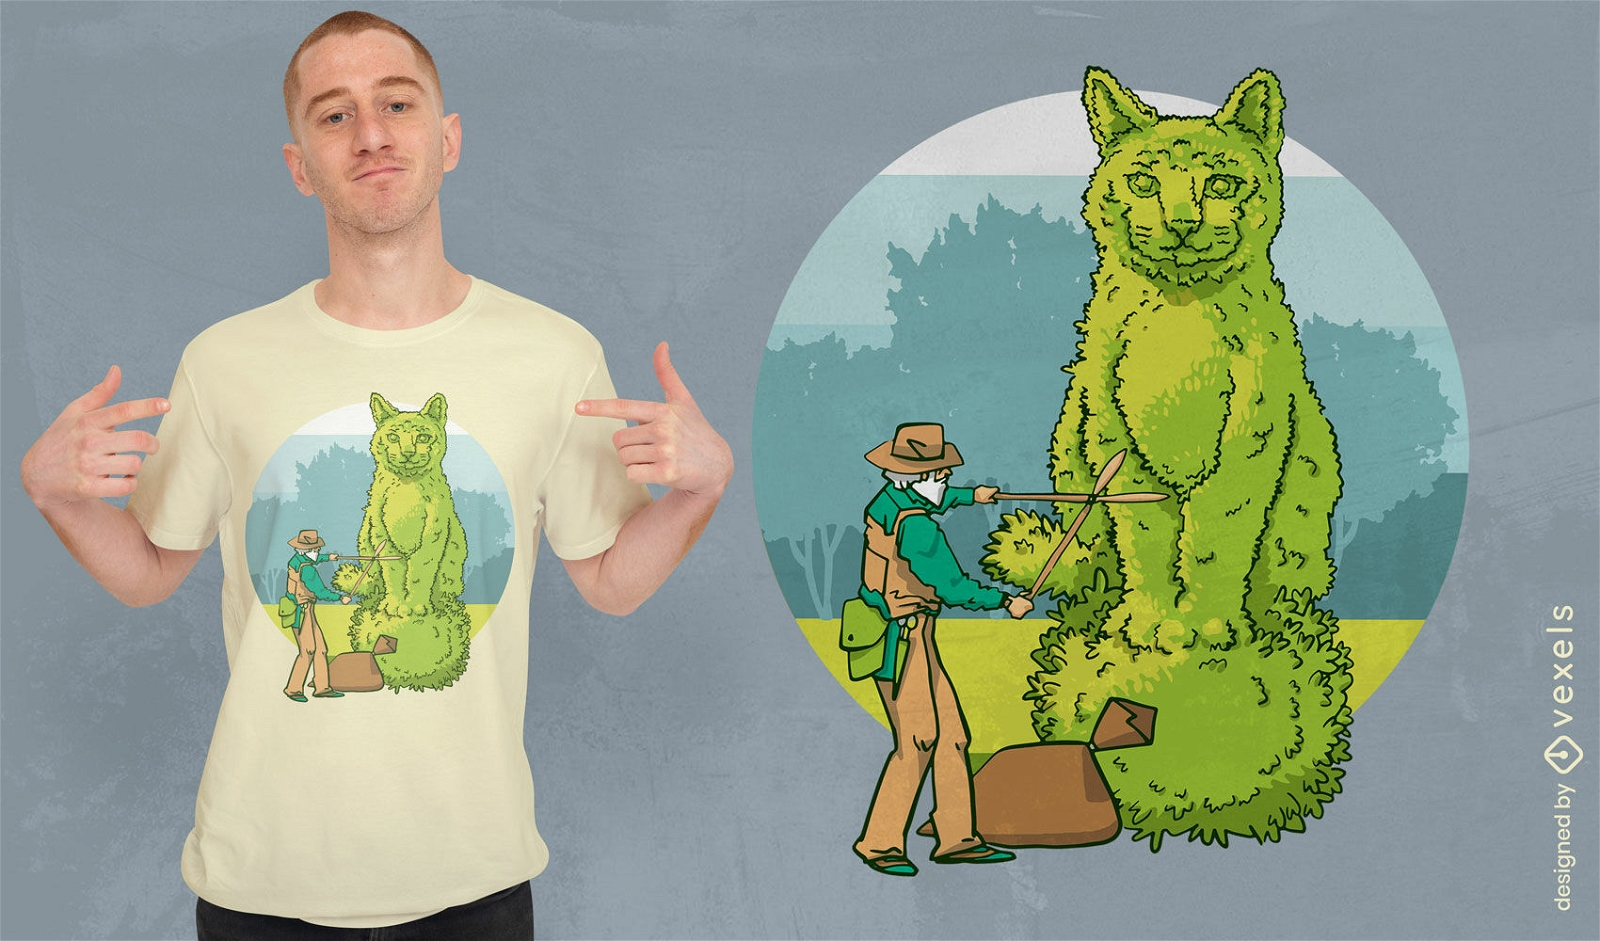 Dise?o de camiseta de jardiner?a topiaria de gato.